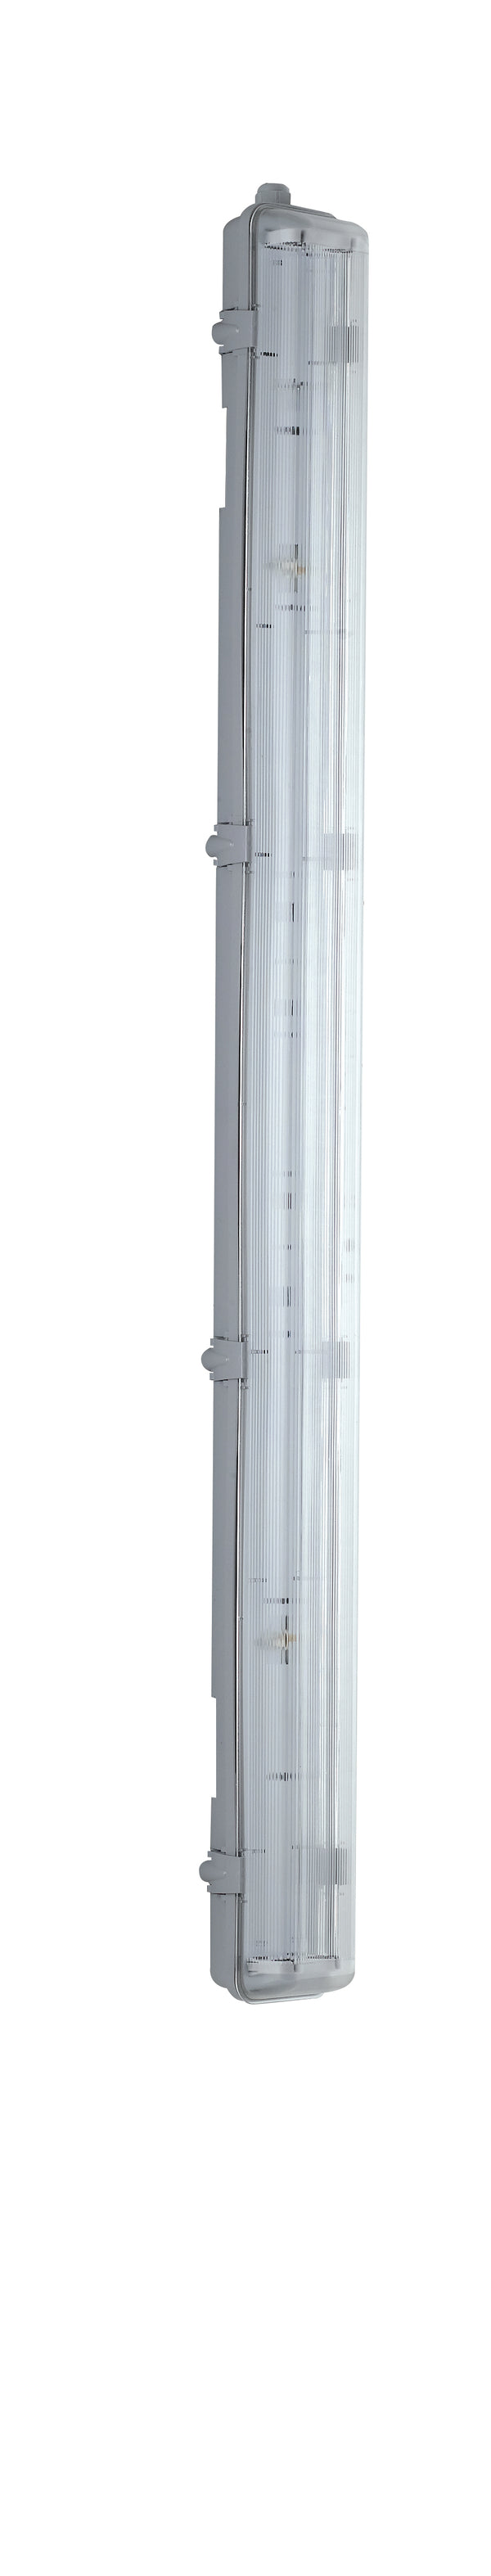 Armature Wasserdichtes Polycarbonatgehäuse für 2 T8-LED-Röhren Intec LED-ATLANTIC-ST-120 online